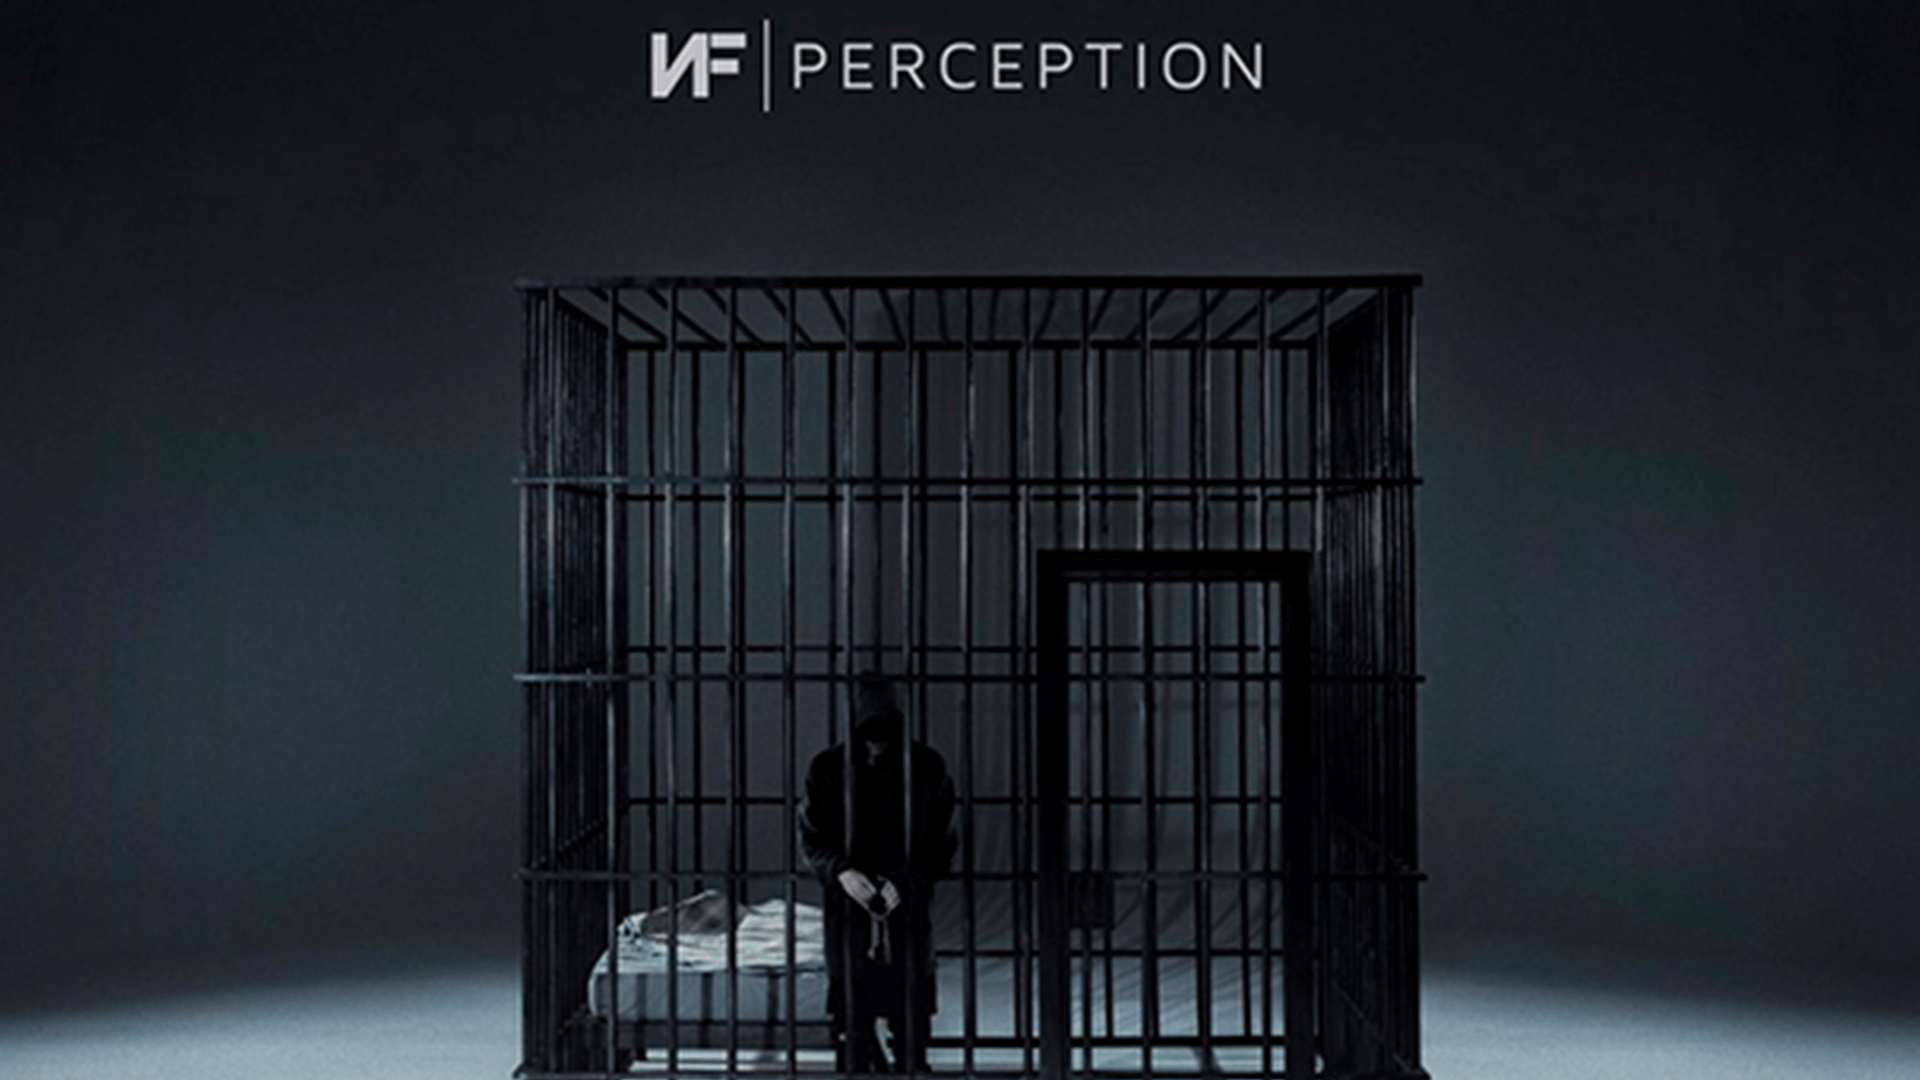 Fan React To NF's Perception Album